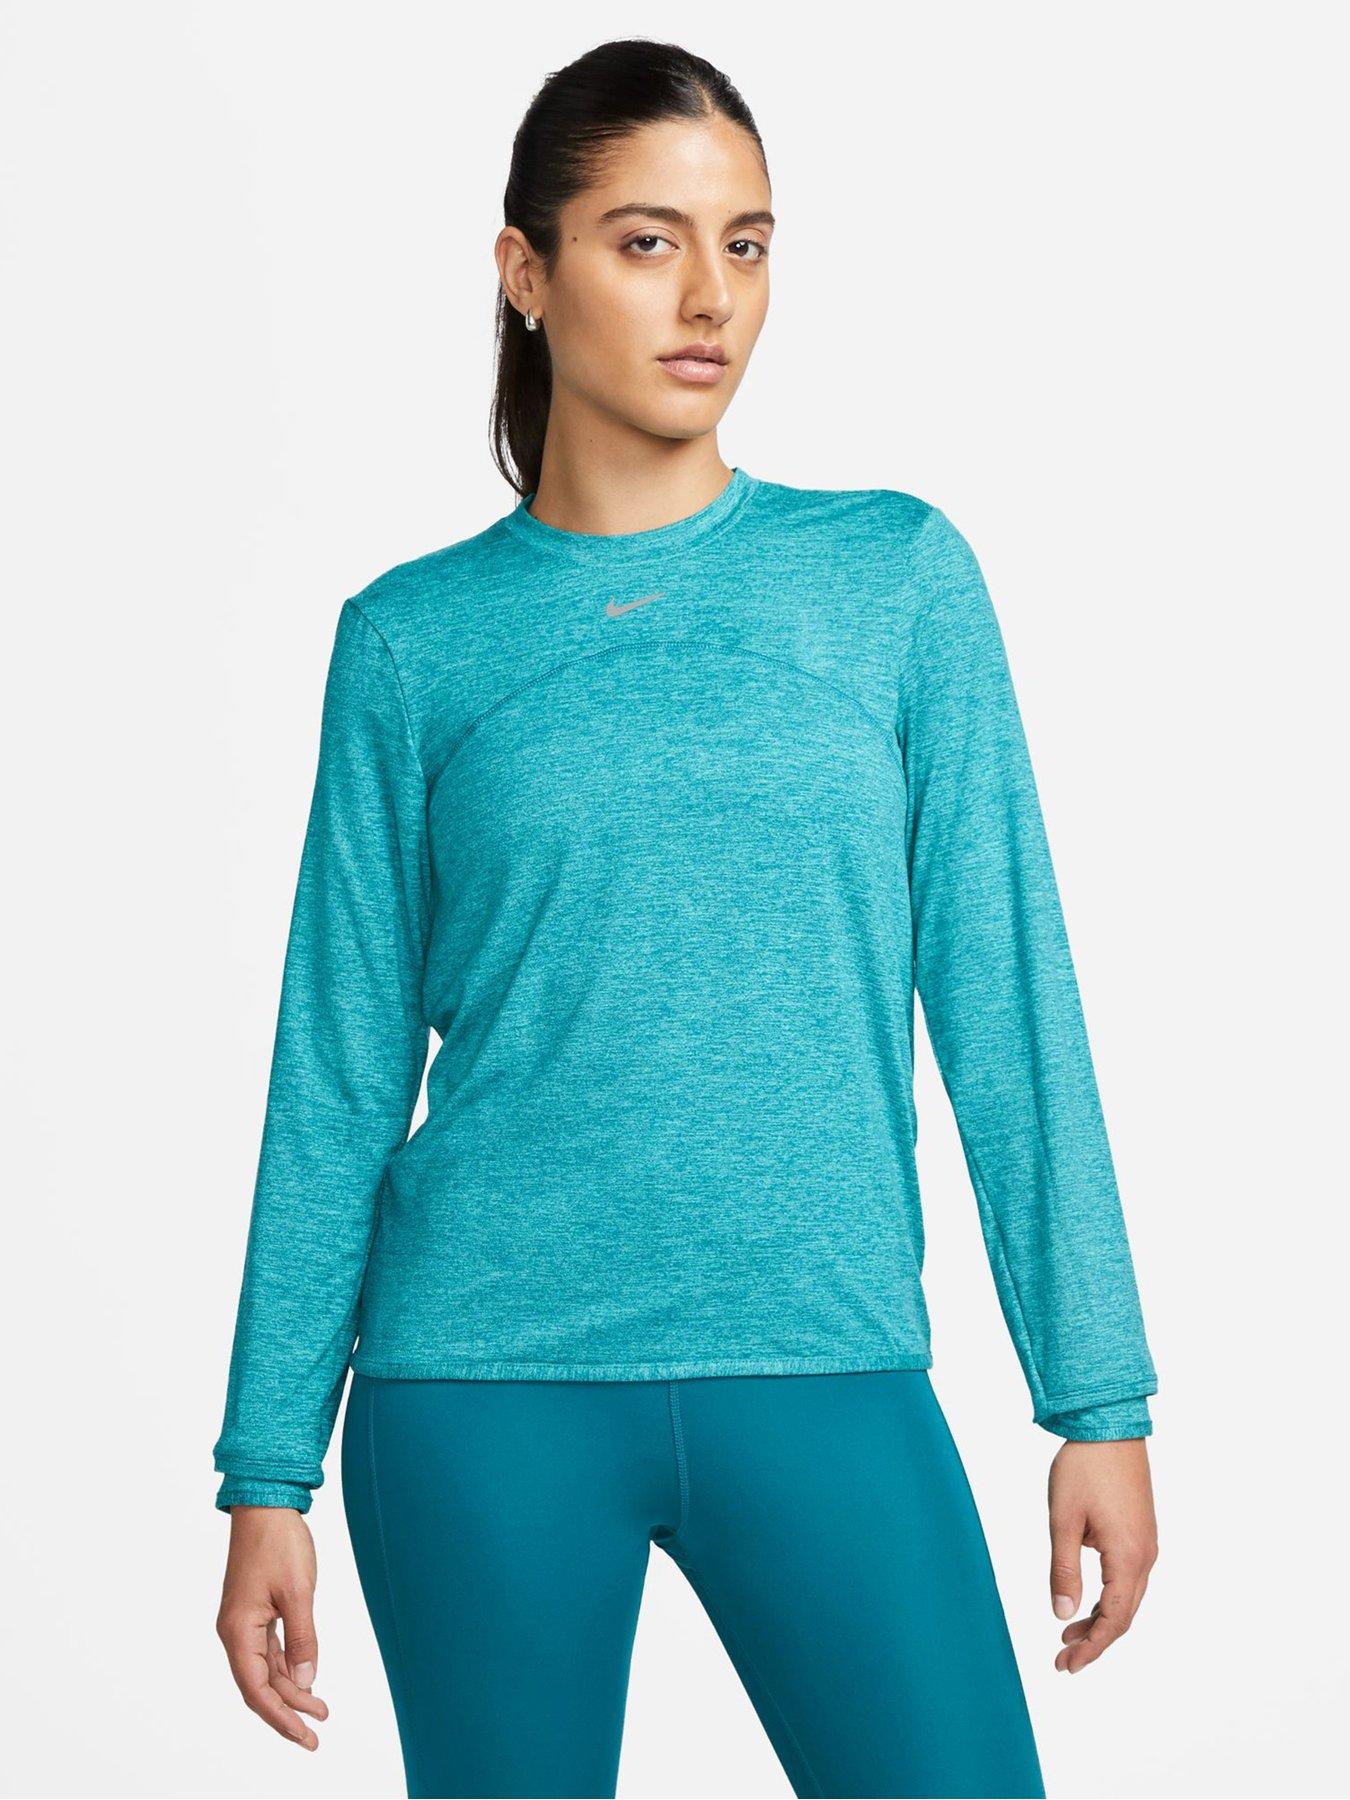 Nike, Hoodies & sweatshirts, Women